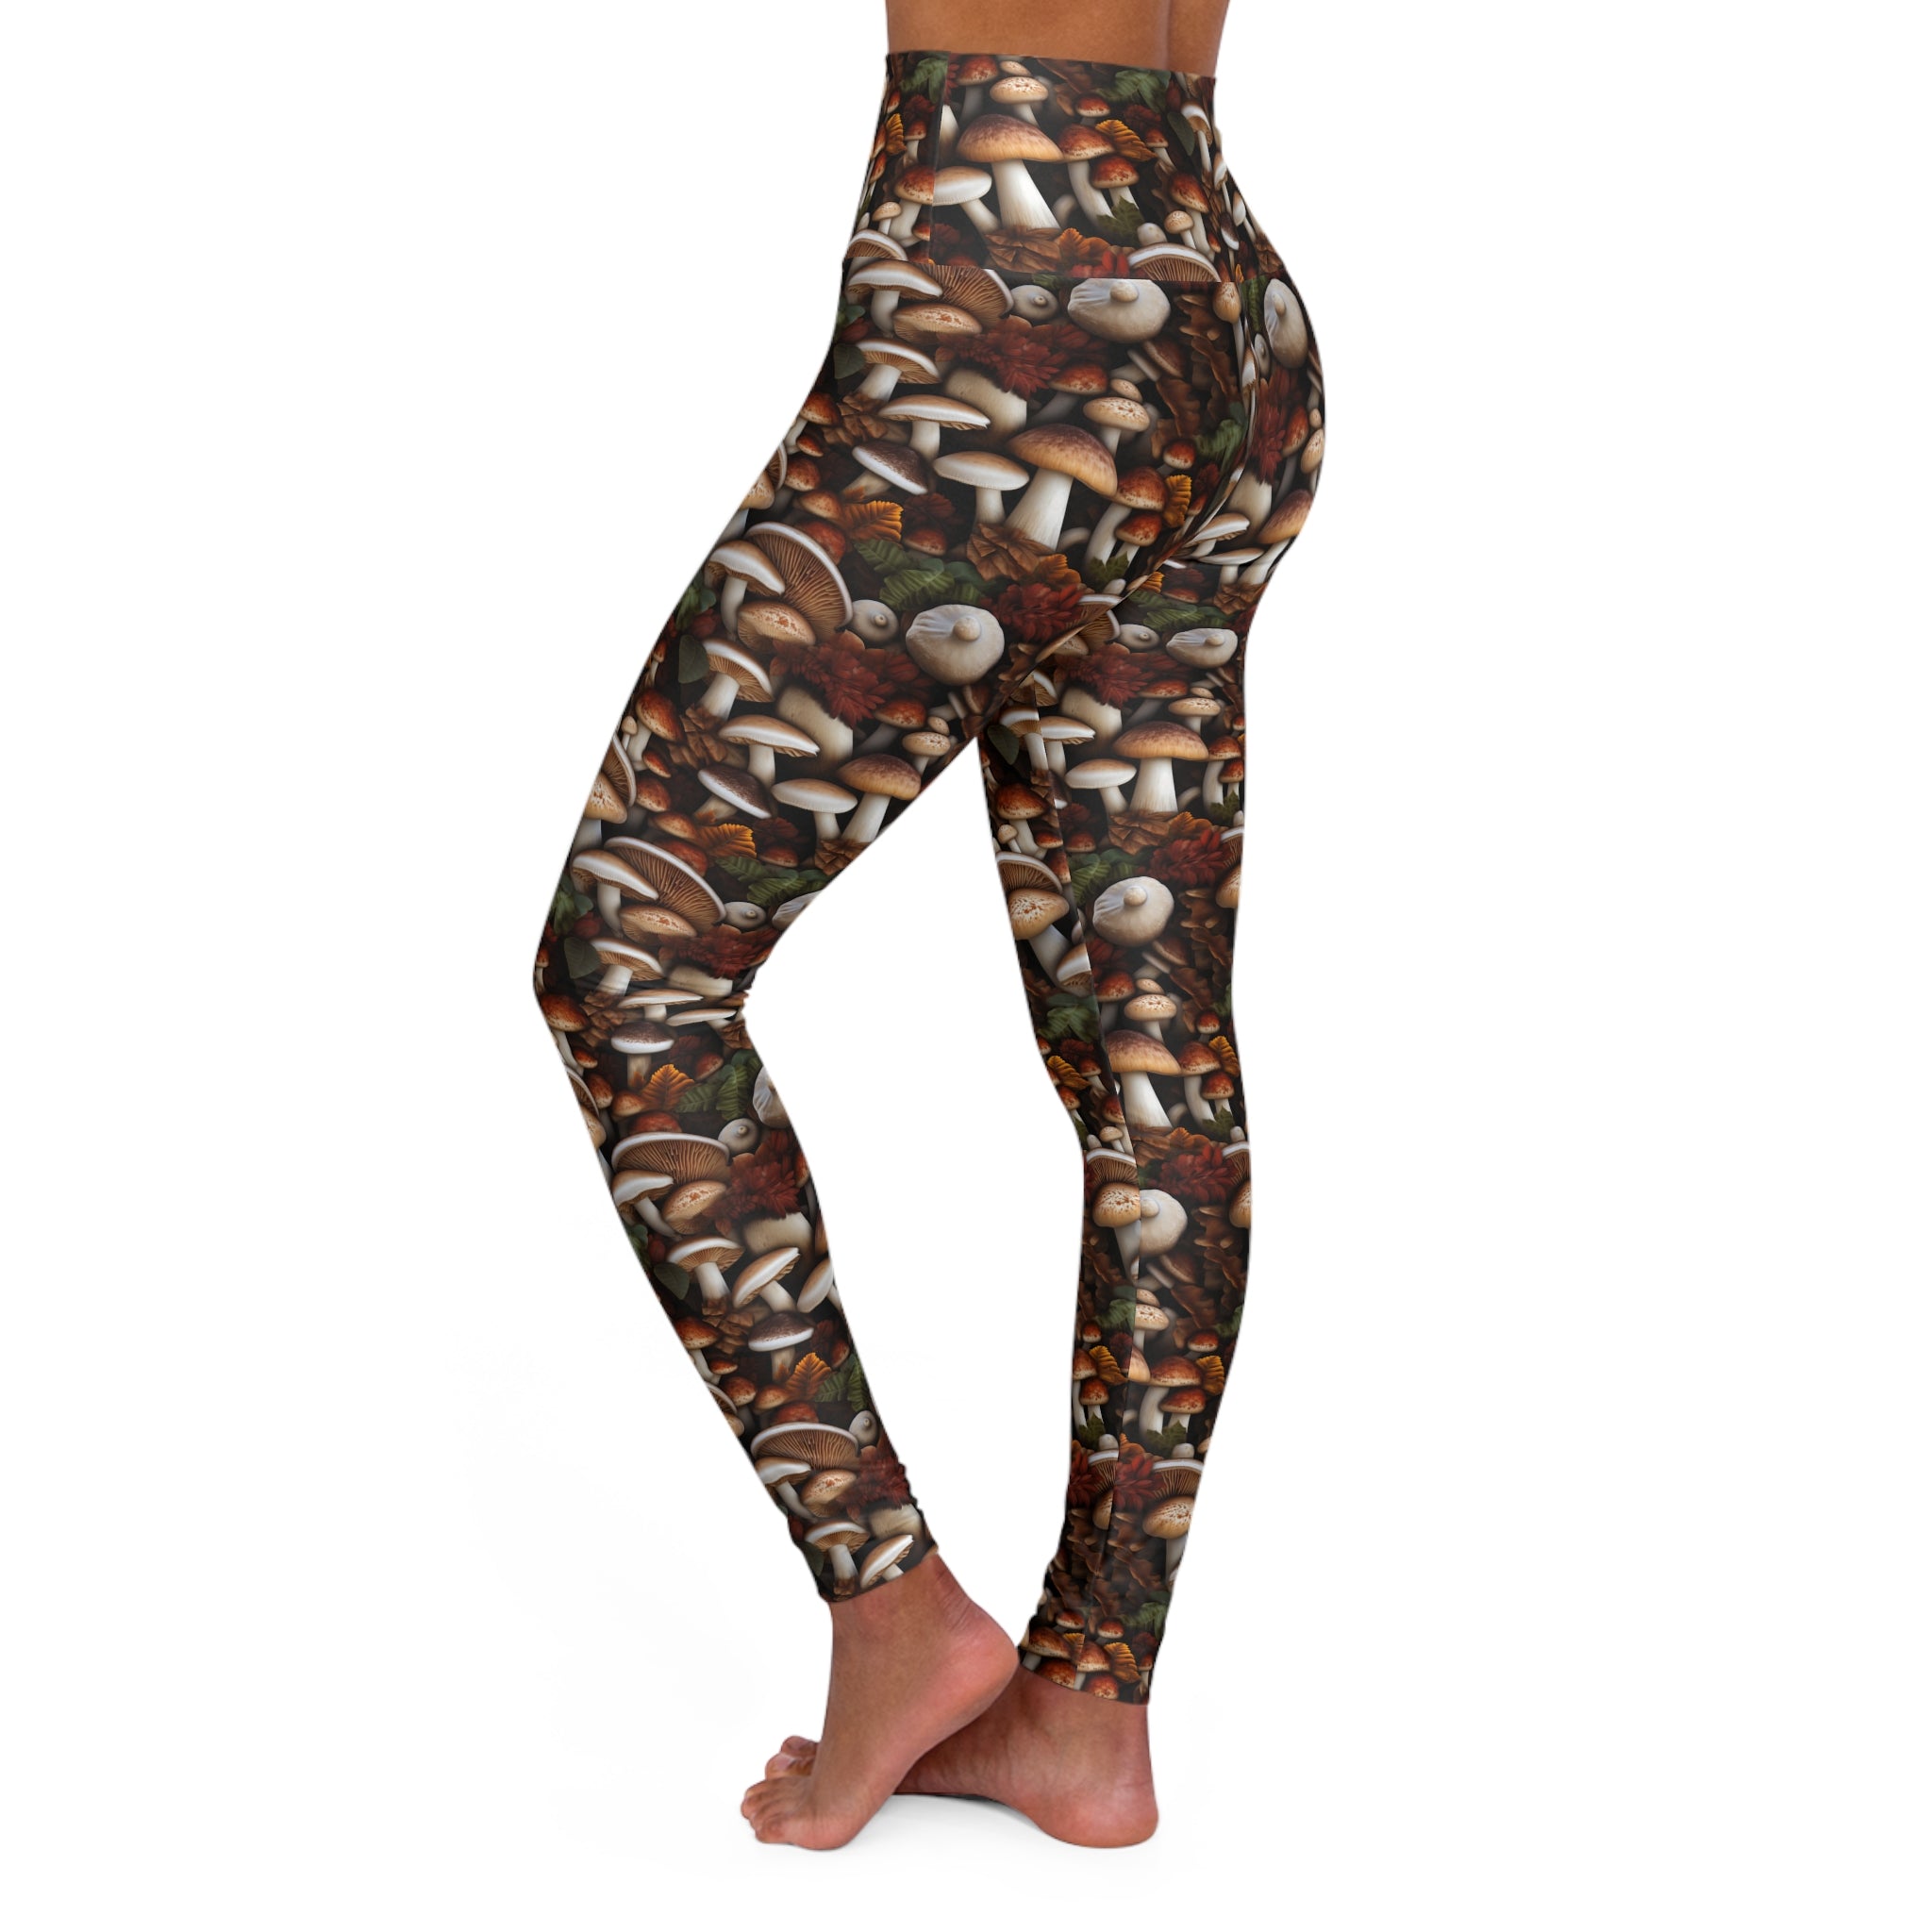 Mushroom Print High-Waisted Yoga Leggings | Trendy & Supportive | Women's S-2XL